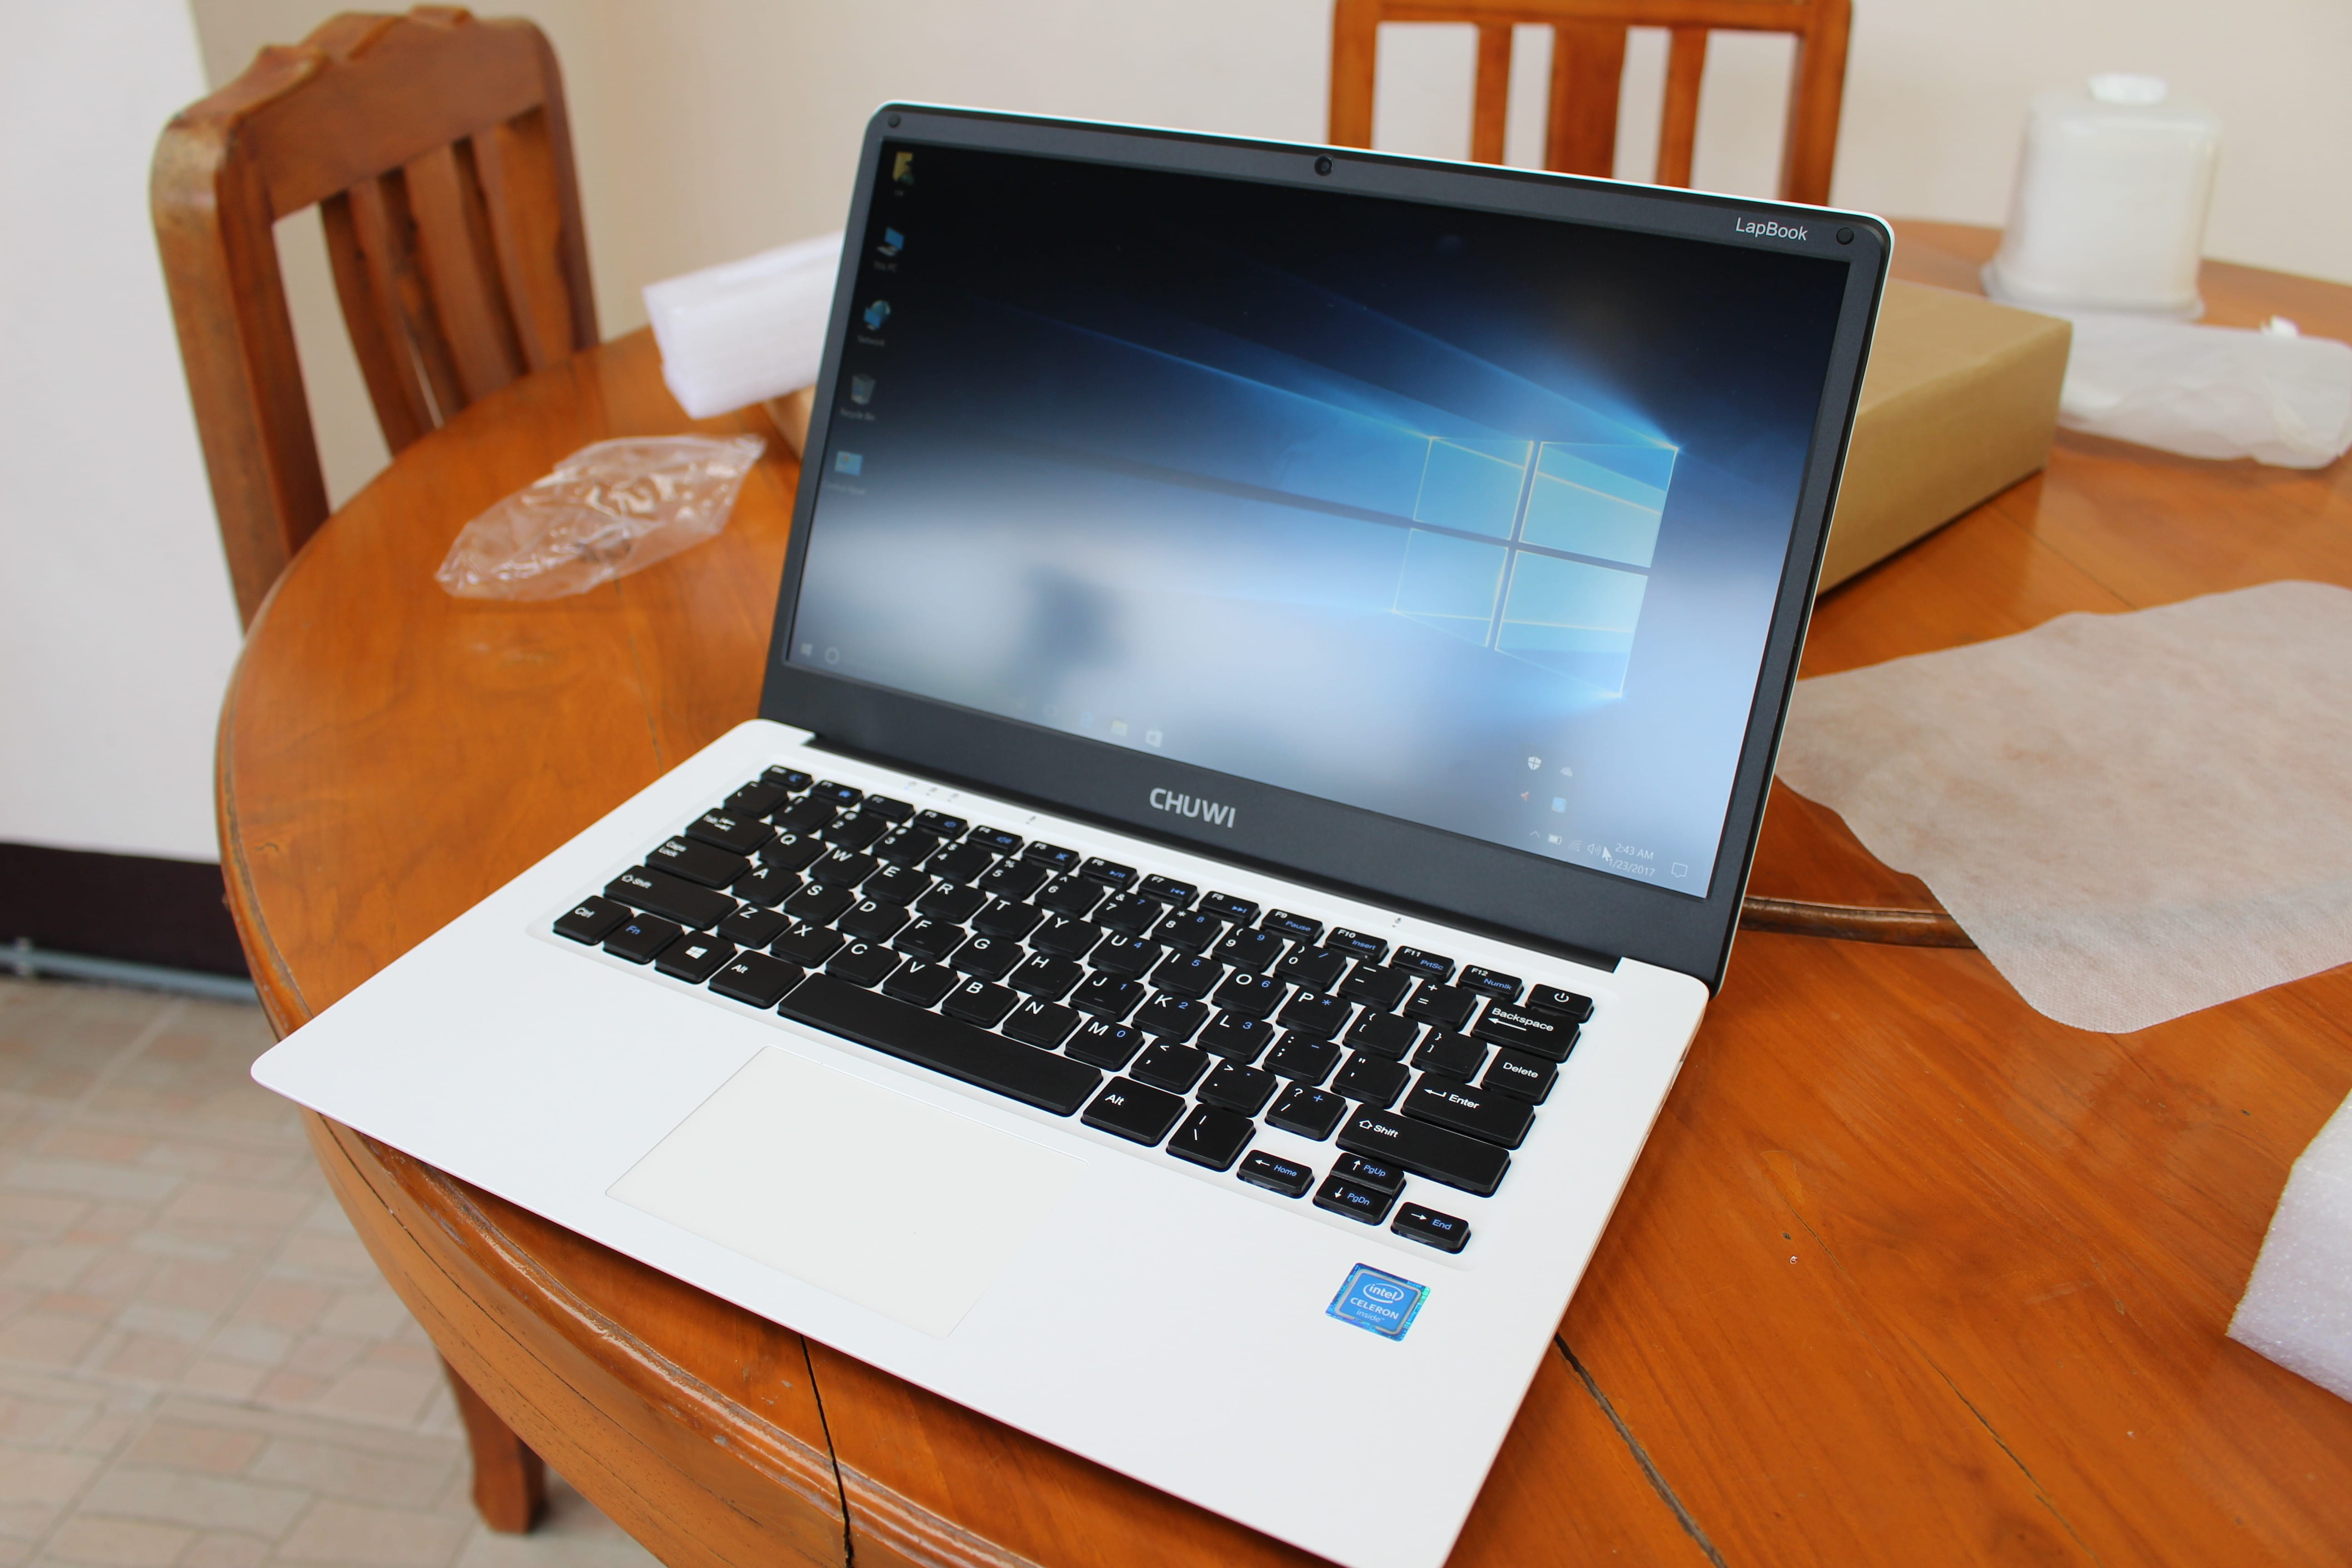 CHUWI LapBook 14.1 Apollo Lake Laptop Review - Part 1: Unboxing